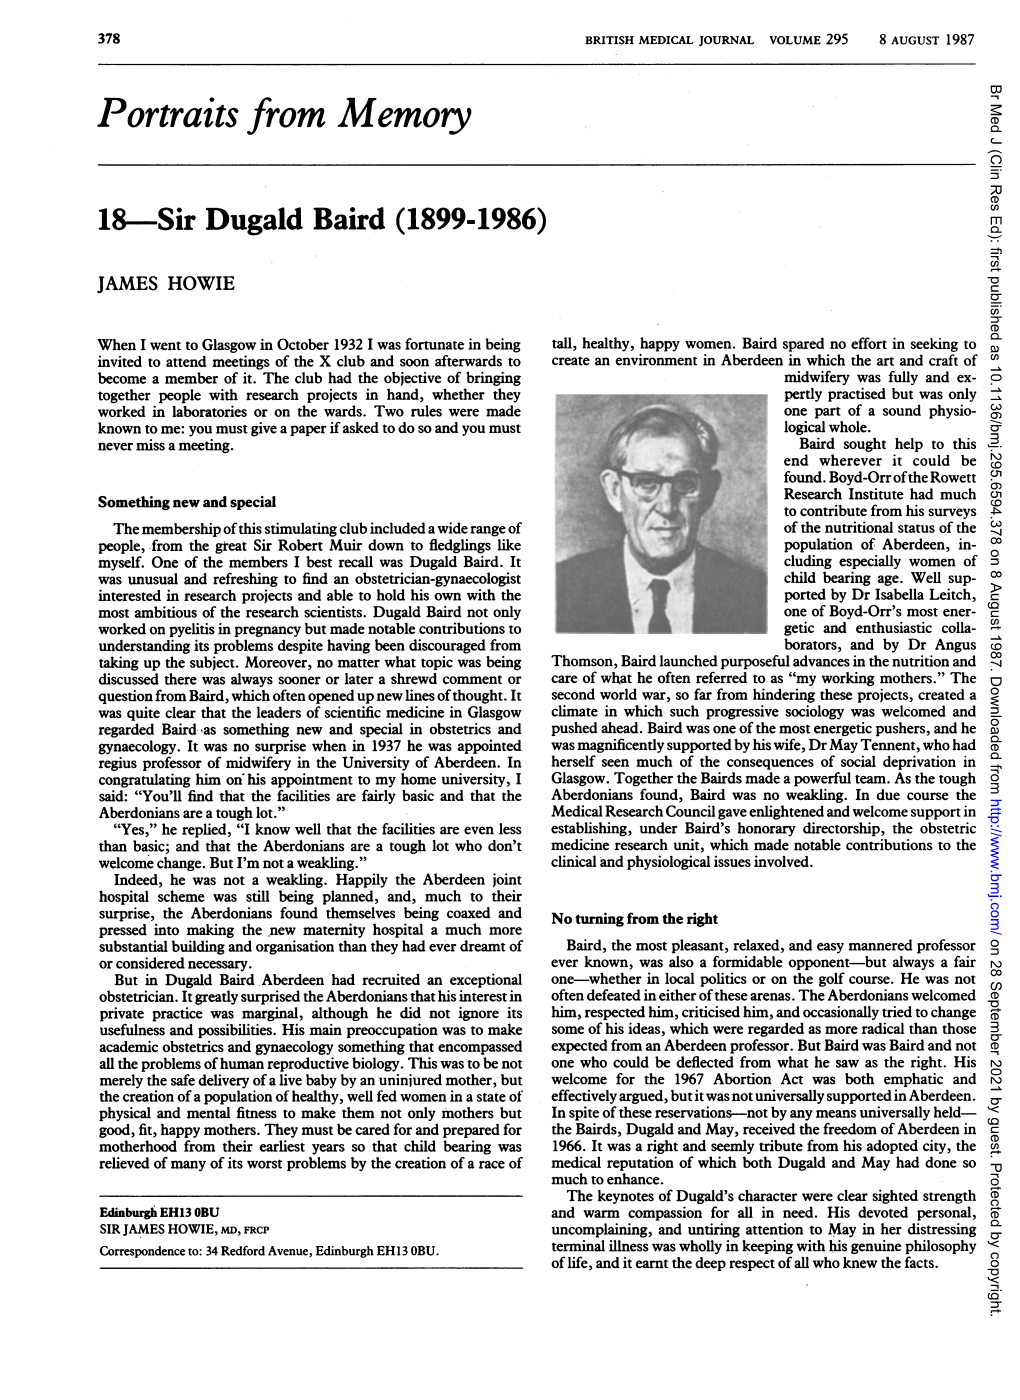 18-Sir Dugald Baird (1899-1986)